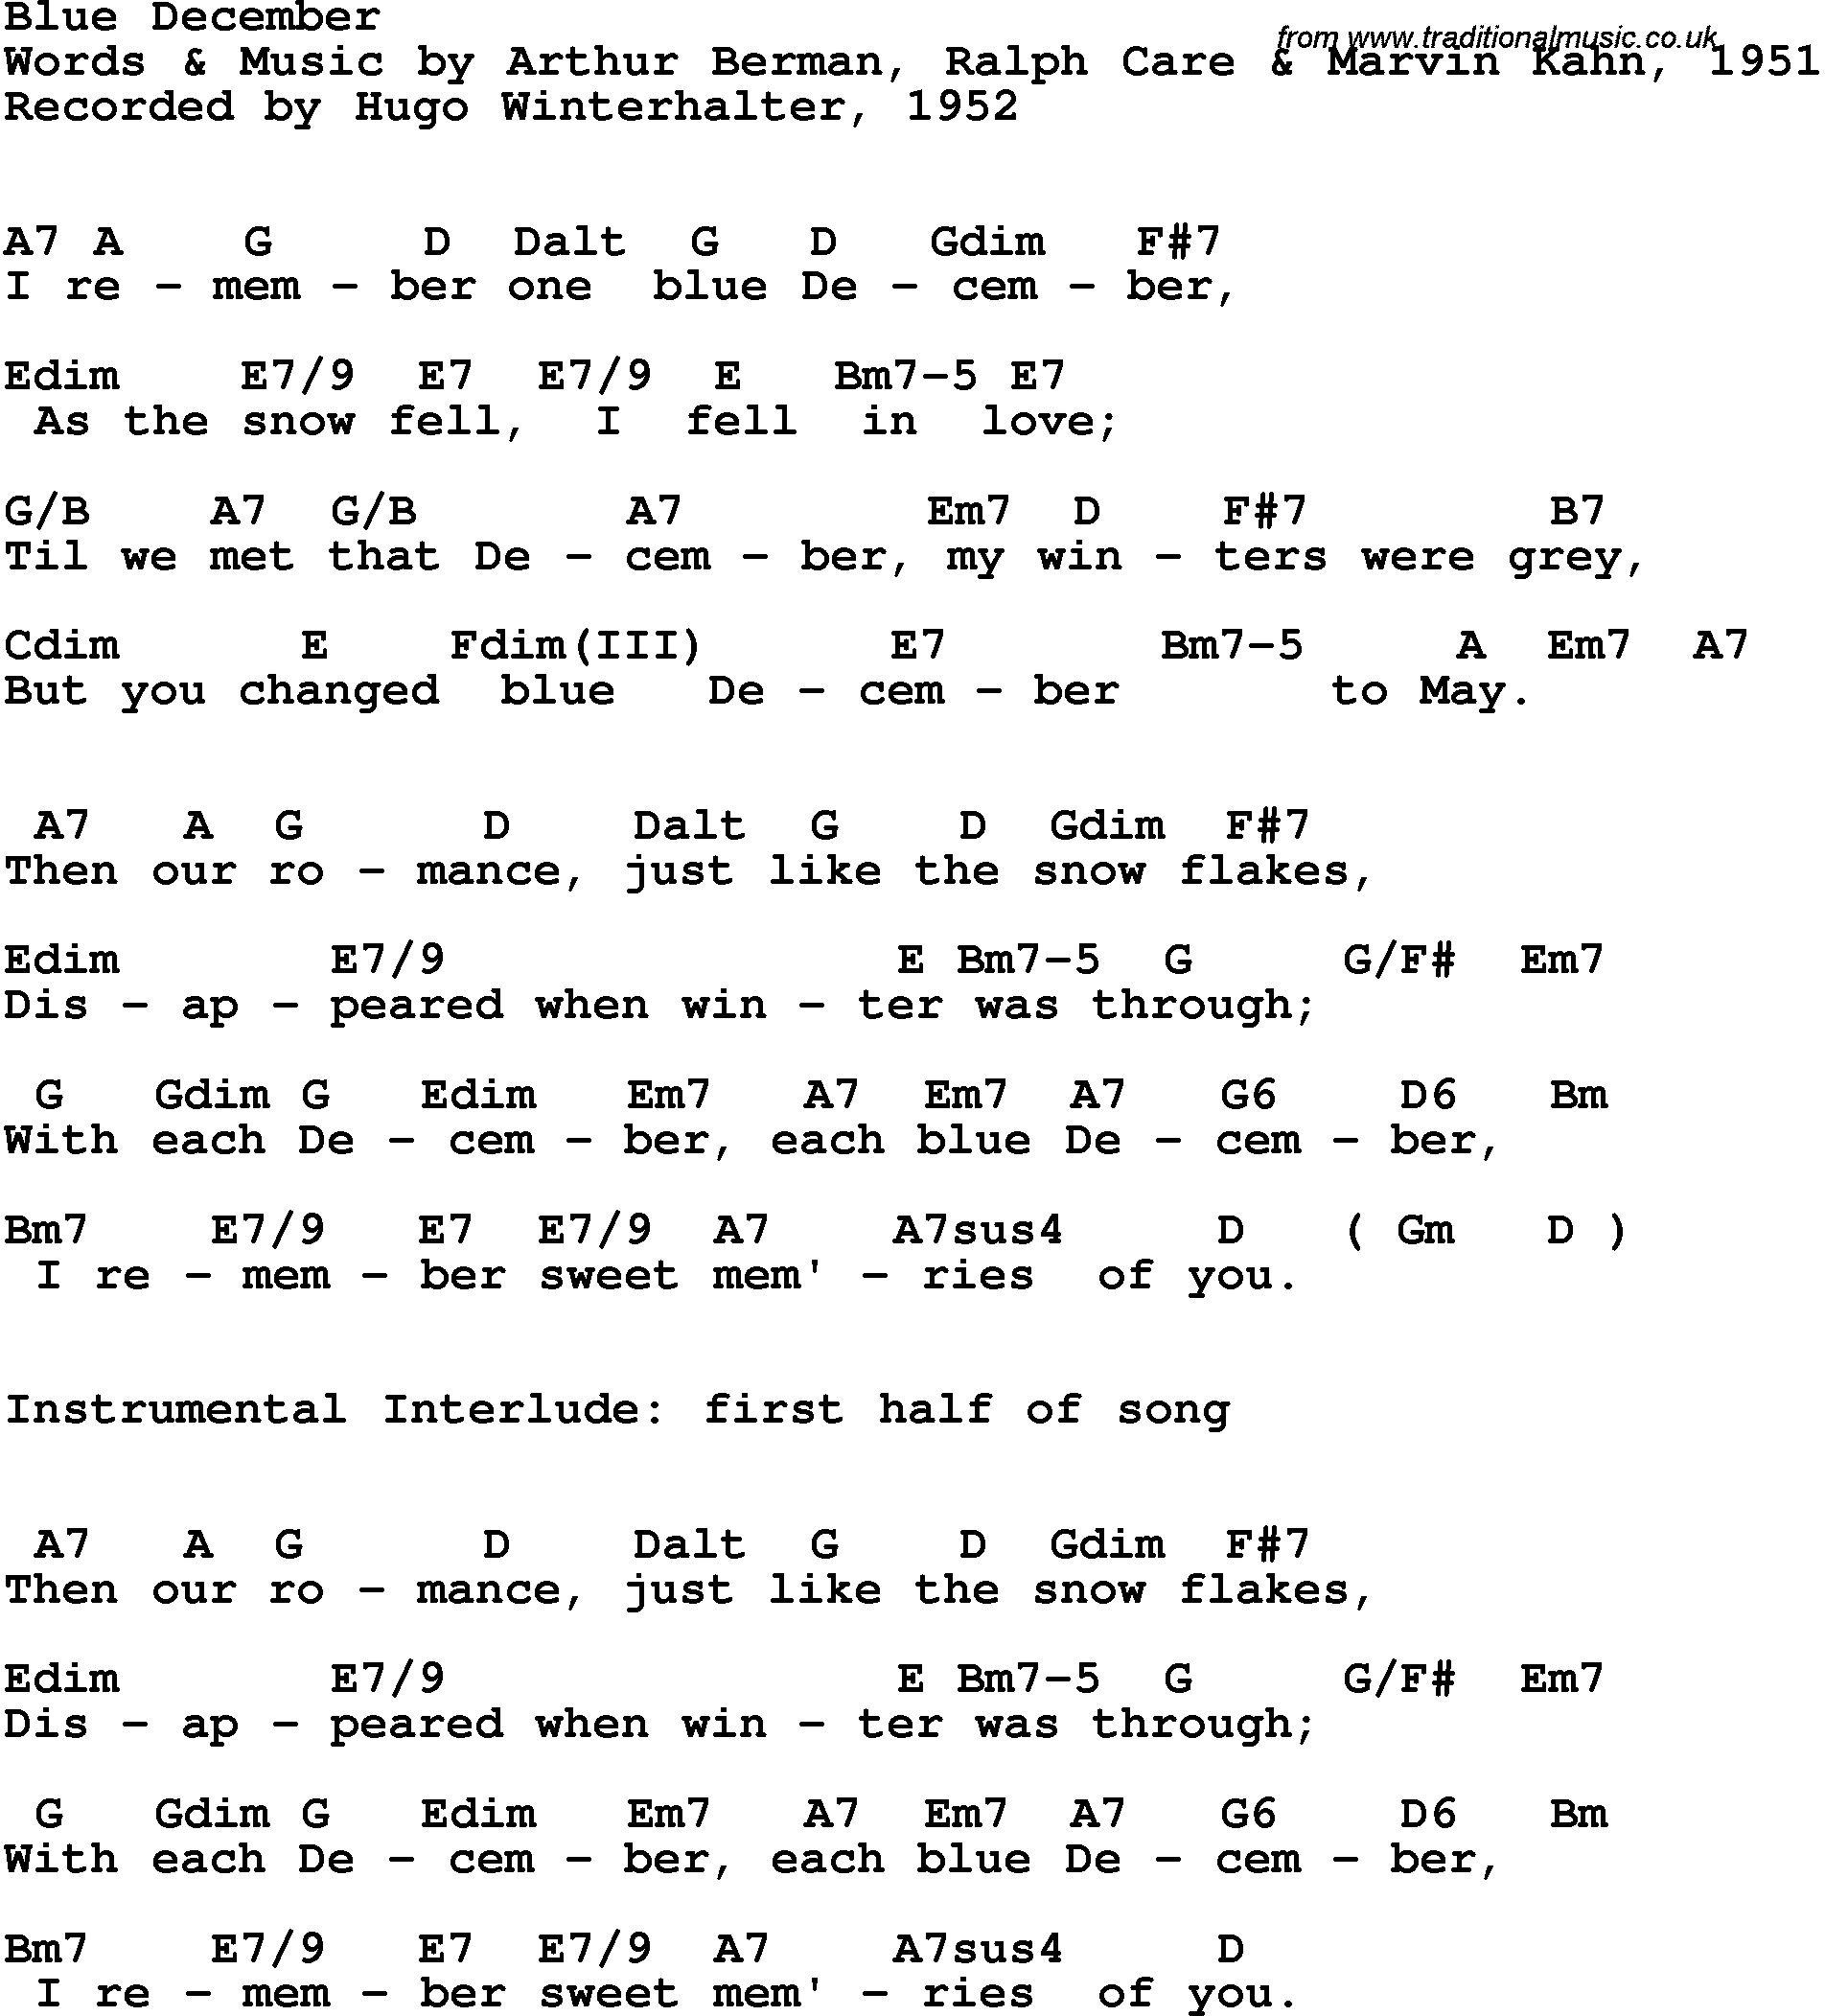 Song Lyrics with guitar chords for Blue December - Hugh Winterhalter, 1952